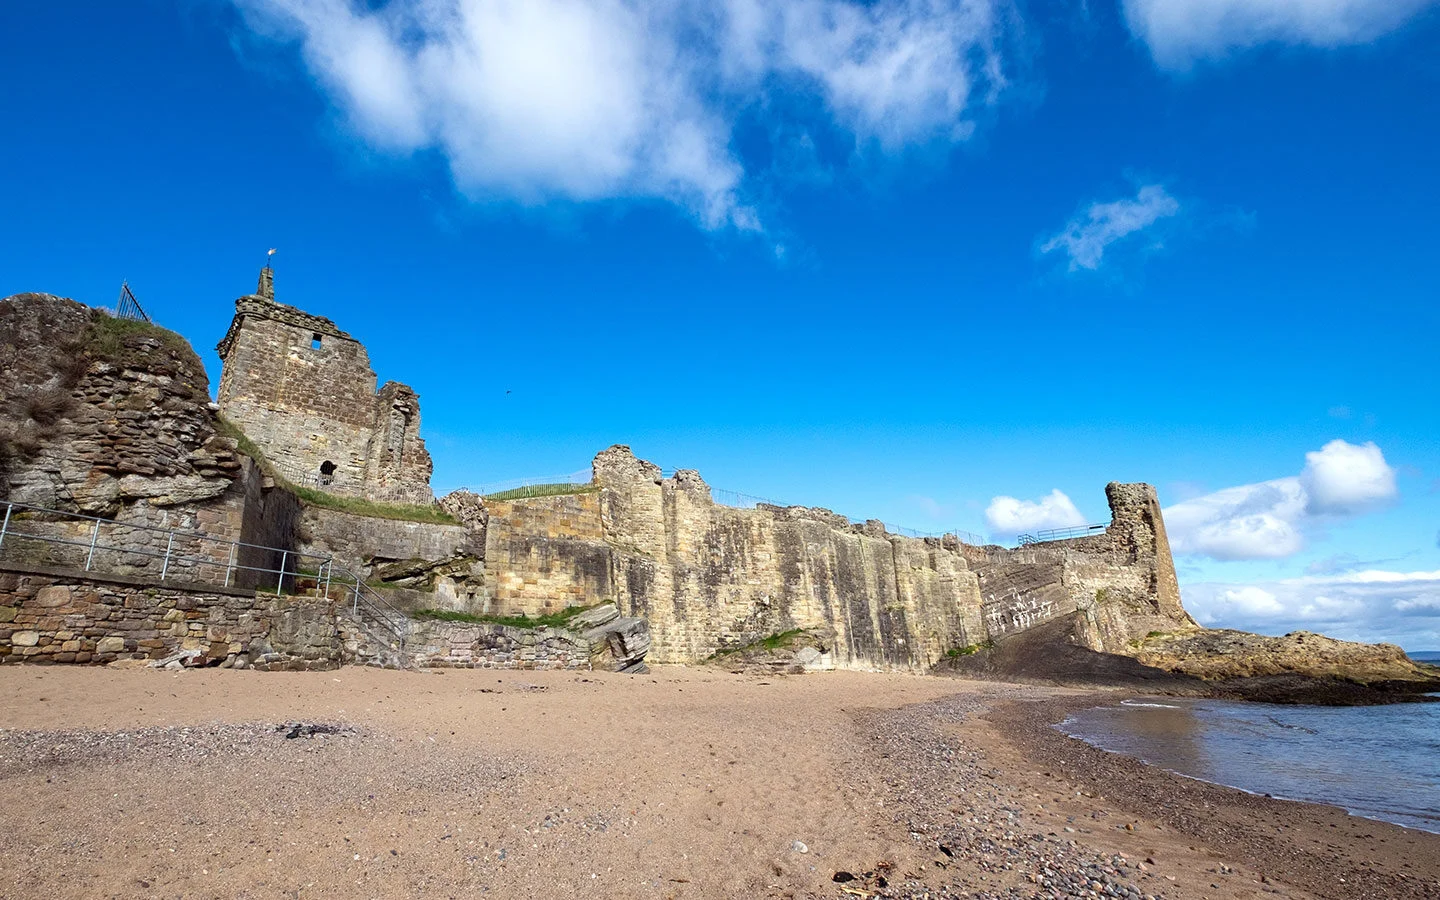 Castle Sands beach in St Andrews, Scotland